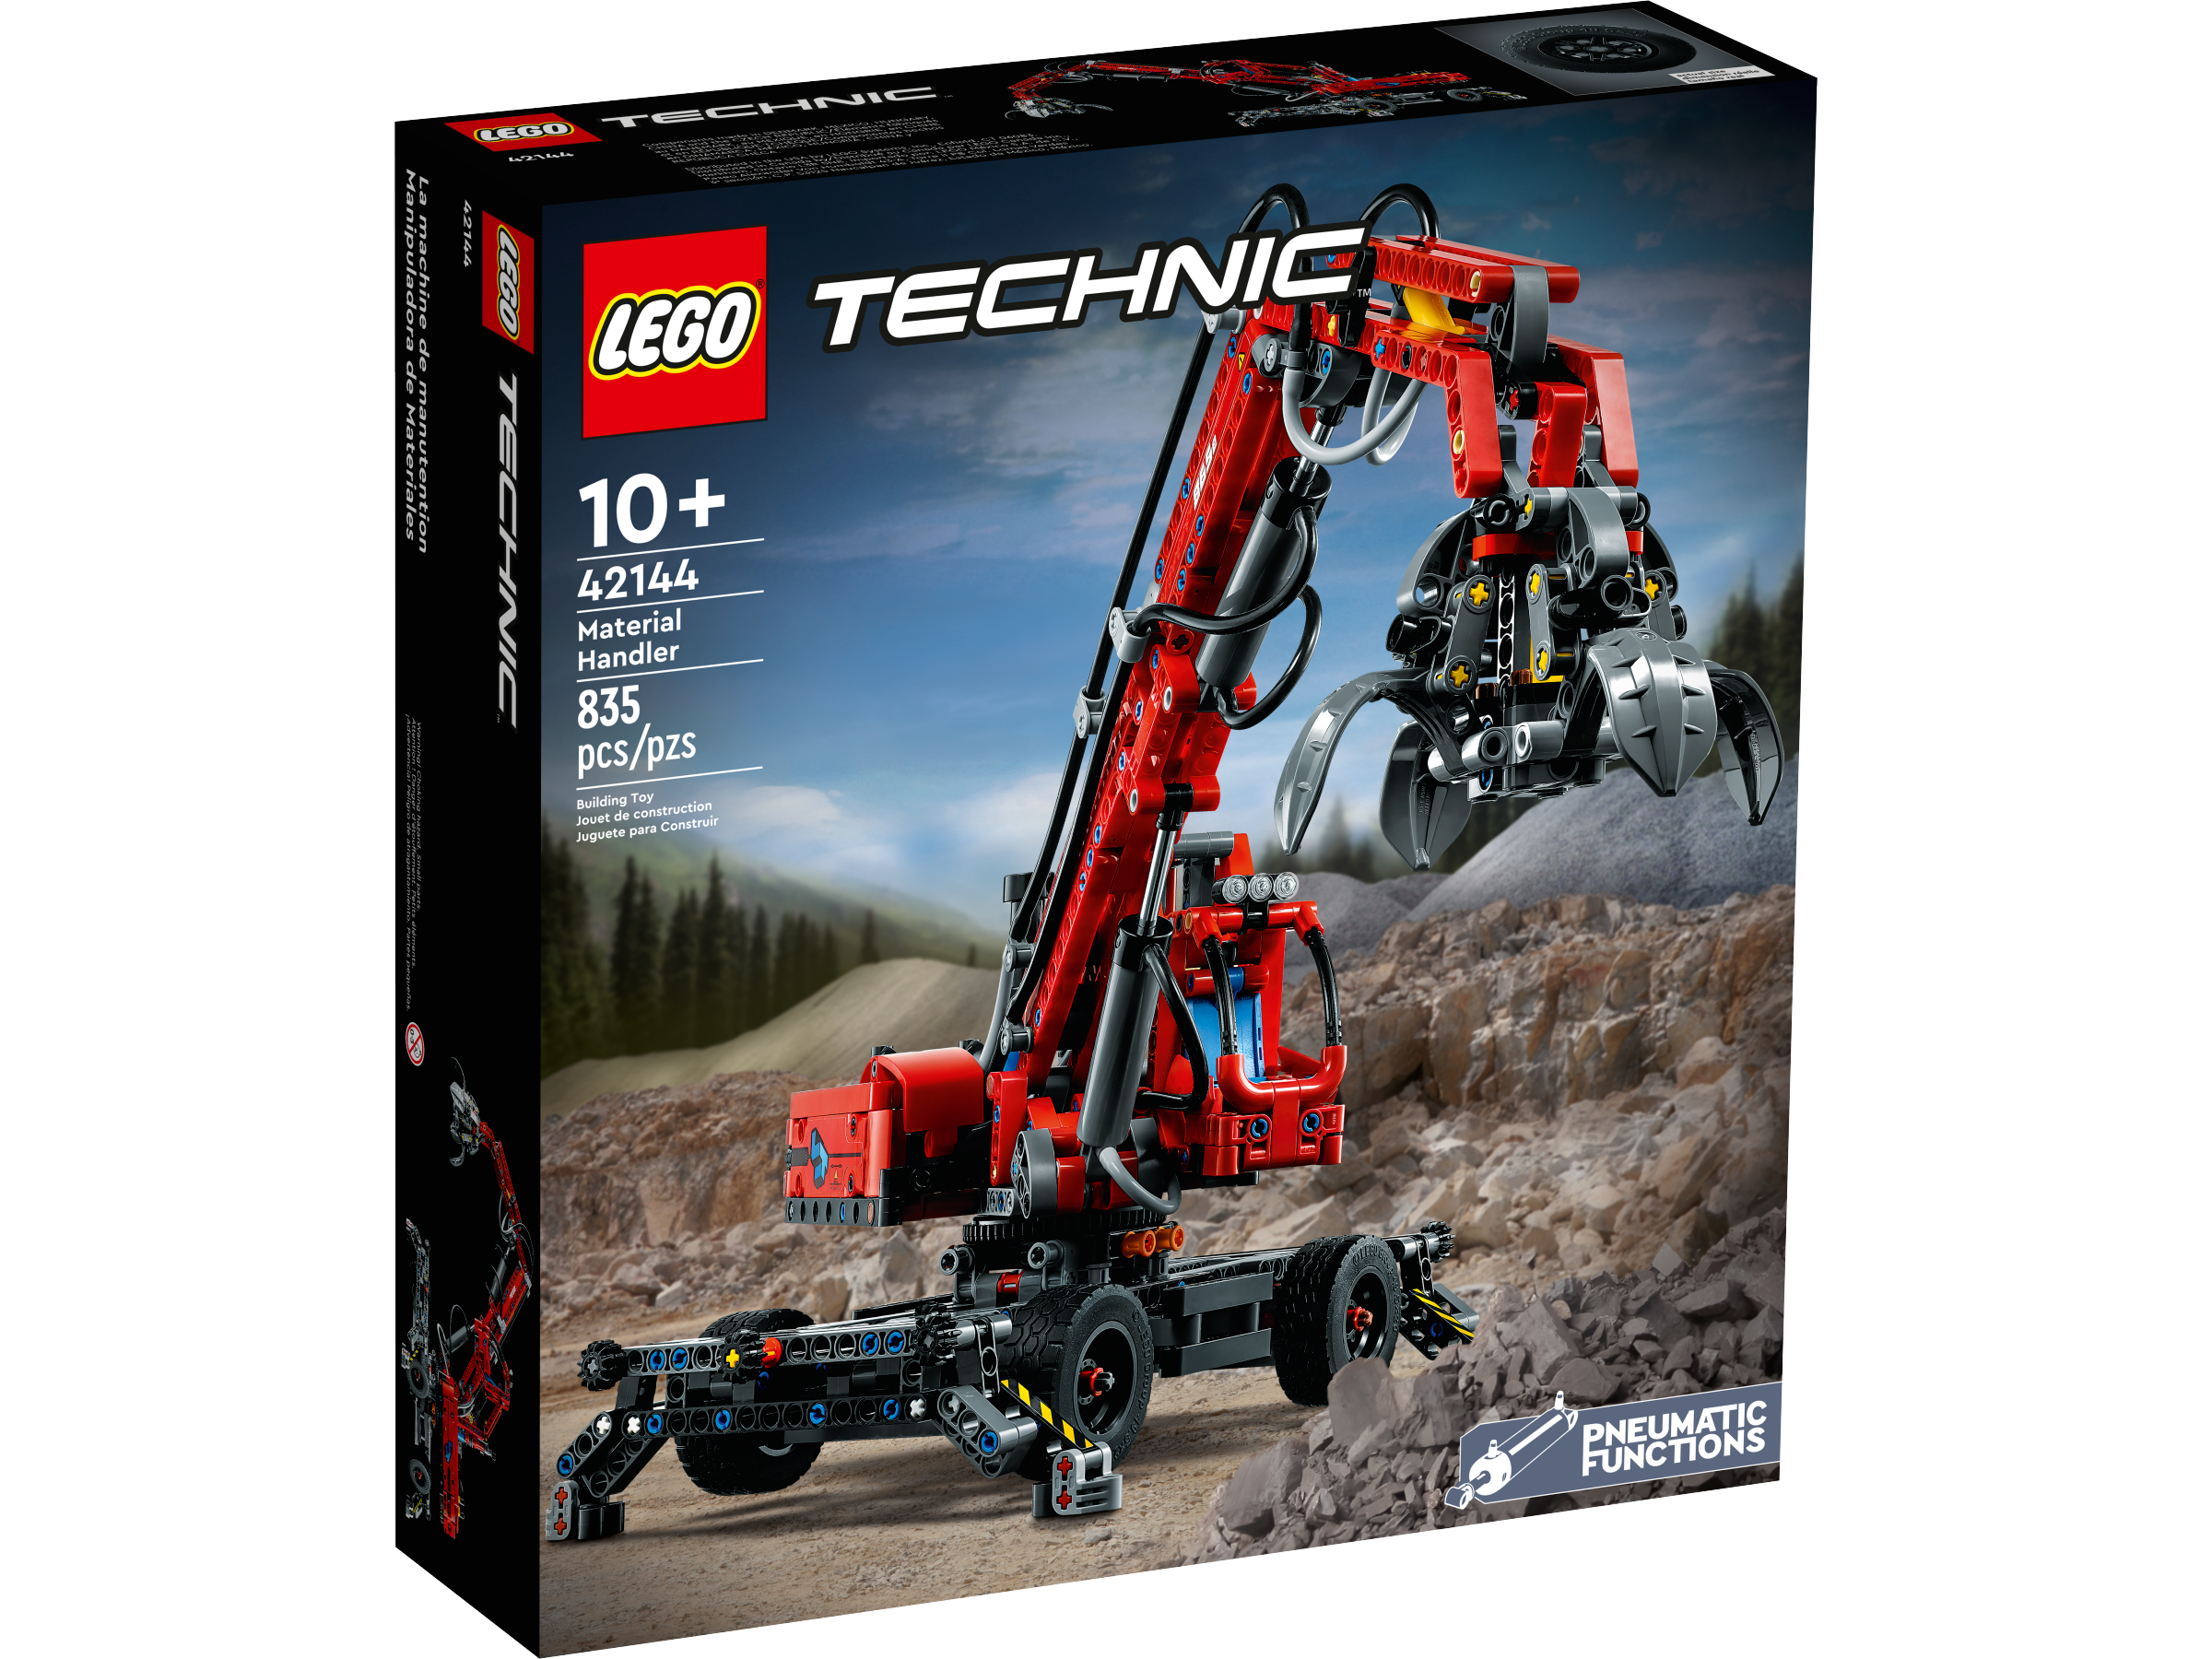 LEGO Technic - Material Handler (42144) starting from £ 123.57